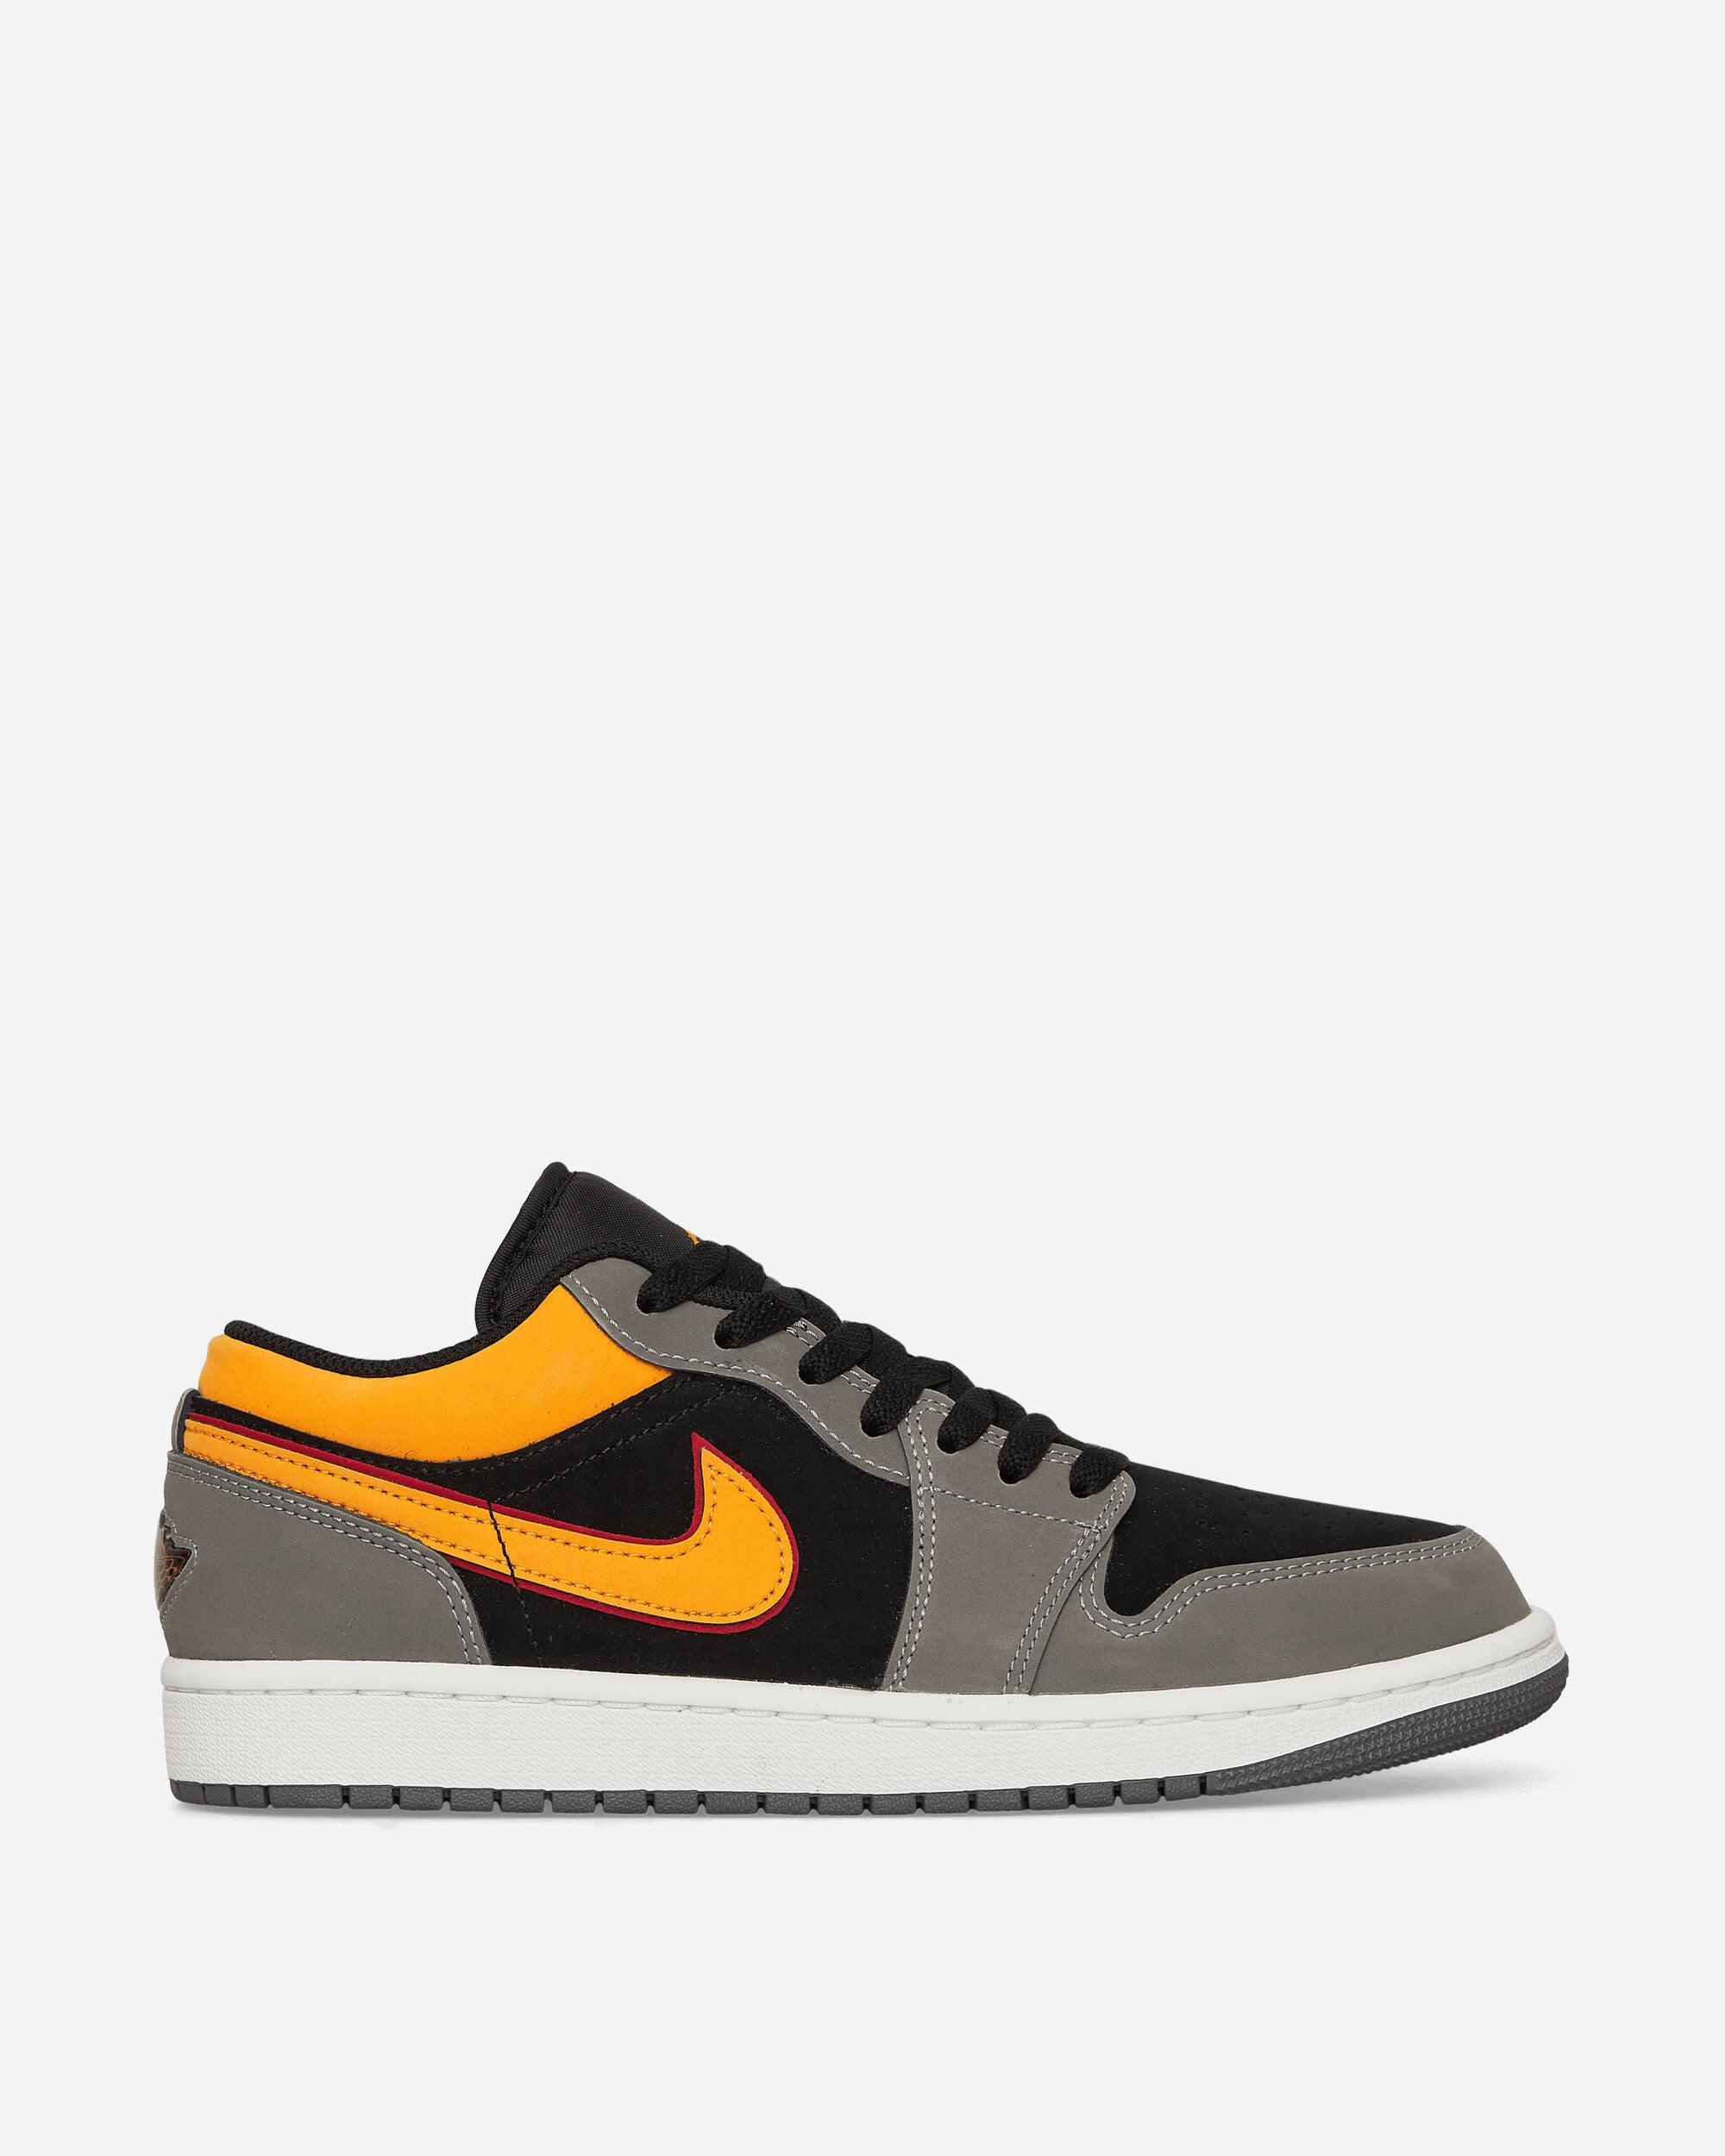 Nike Mens Shoes in Shoes | Orange - Walmart.com